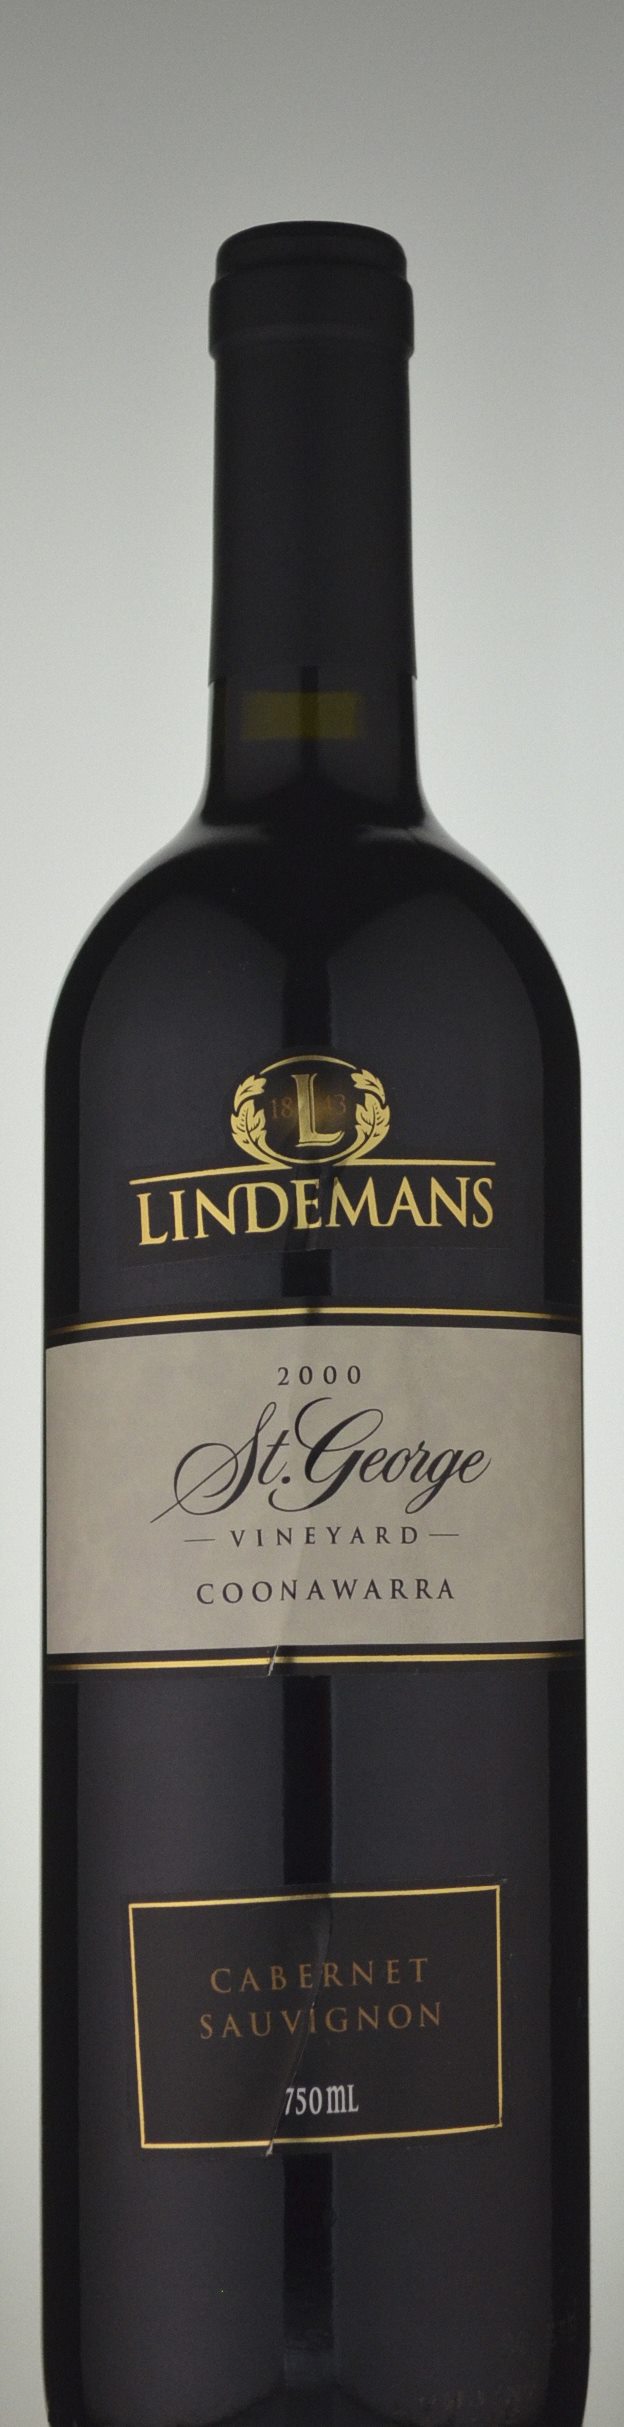 Lindemans St George Vineyard Cabernet Sauvignon 2000